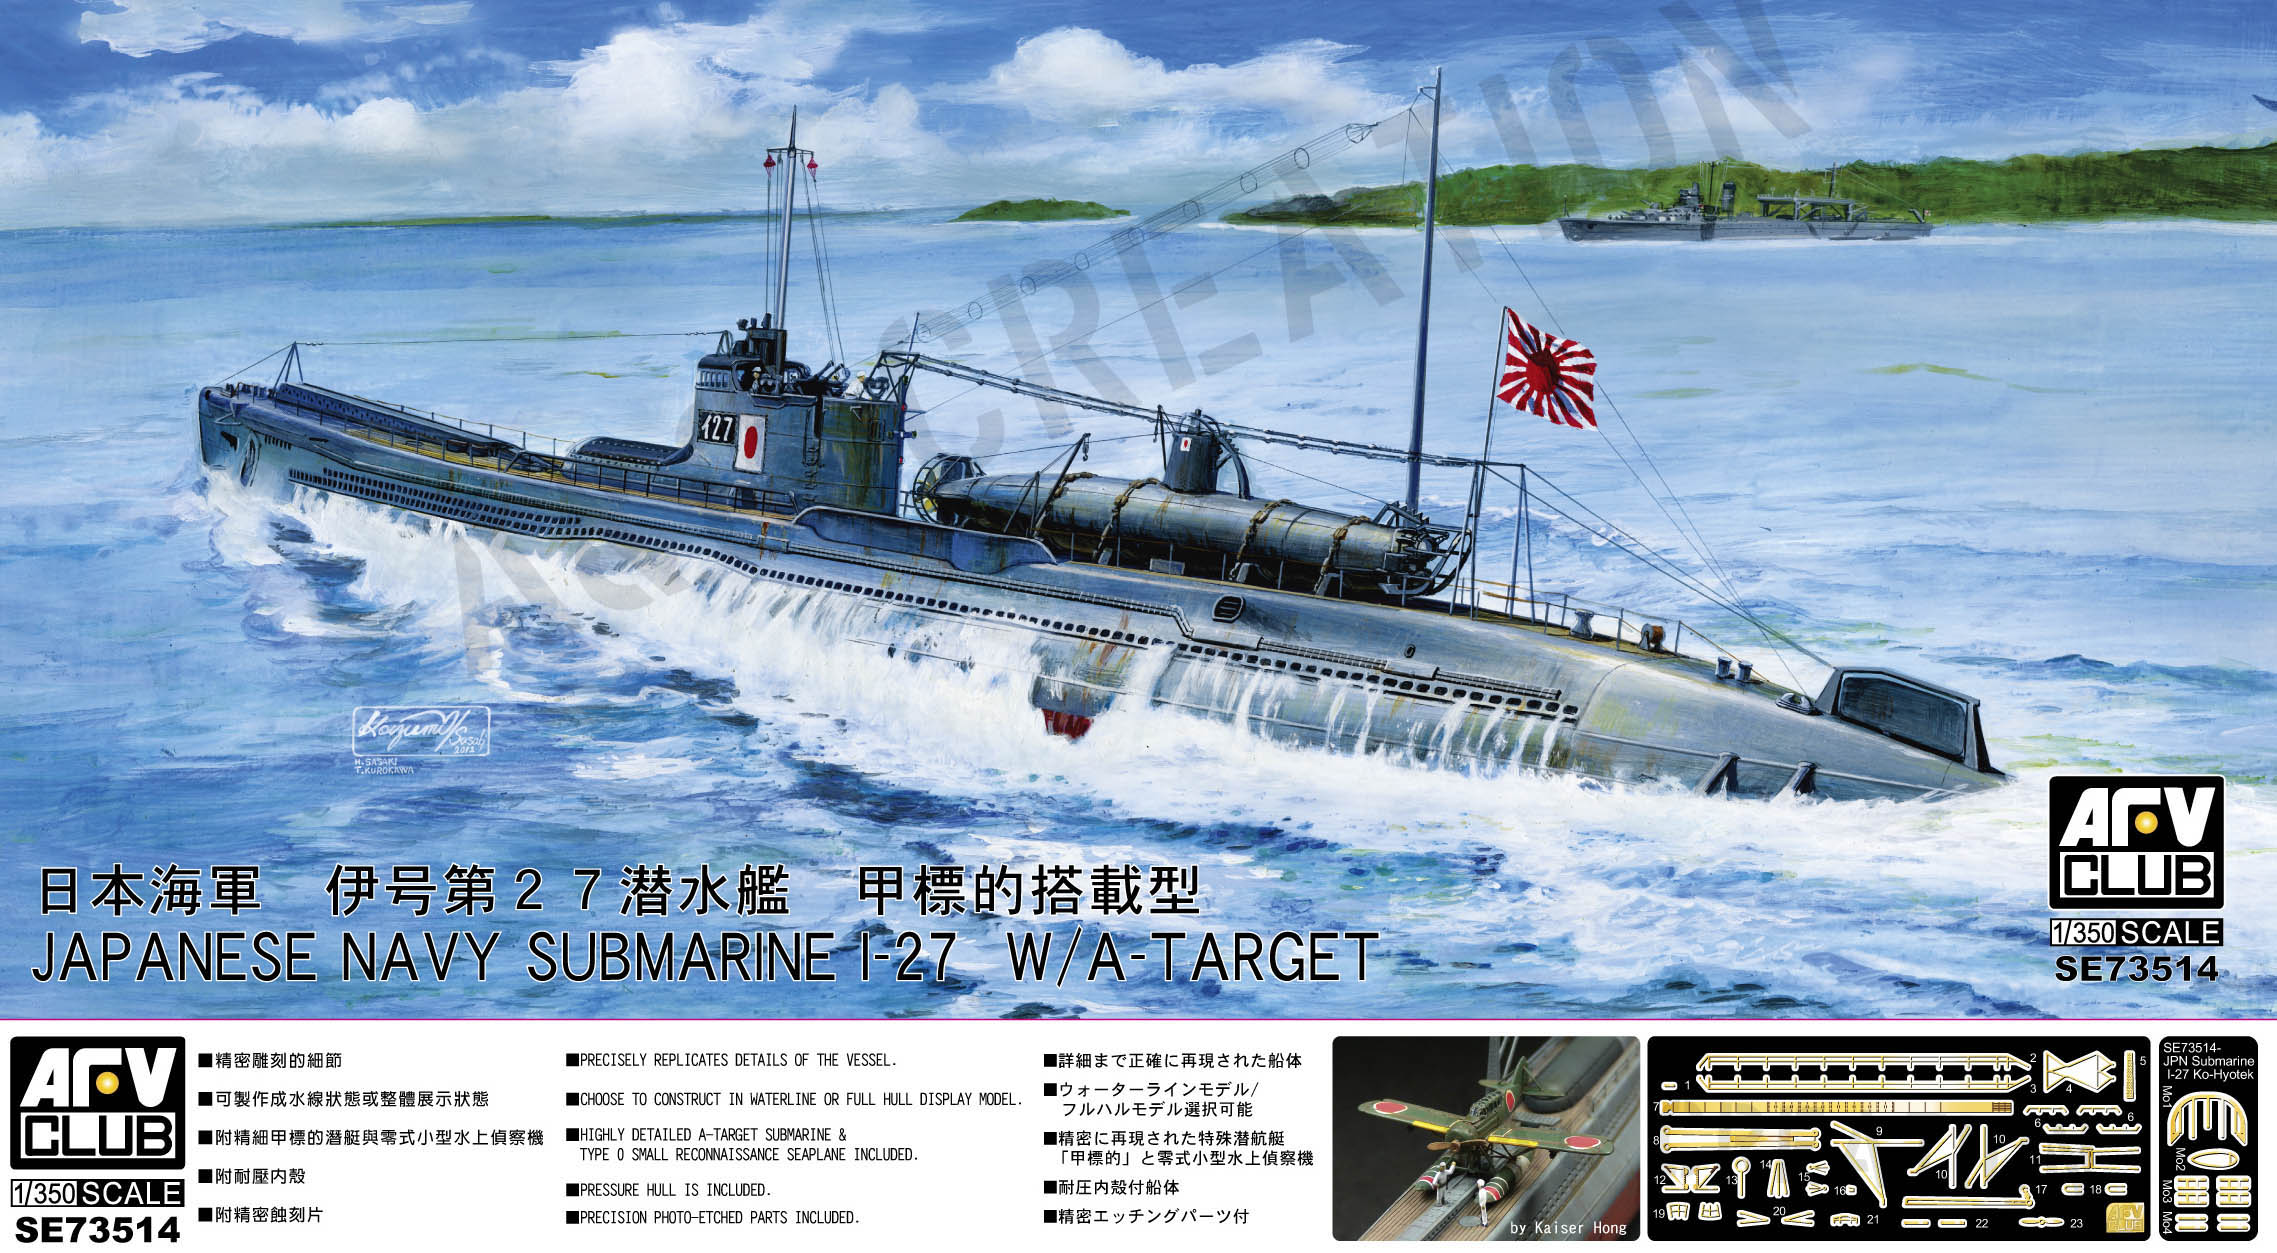 SE73514 Japanese Navy I-27 Submarine W/A-Target